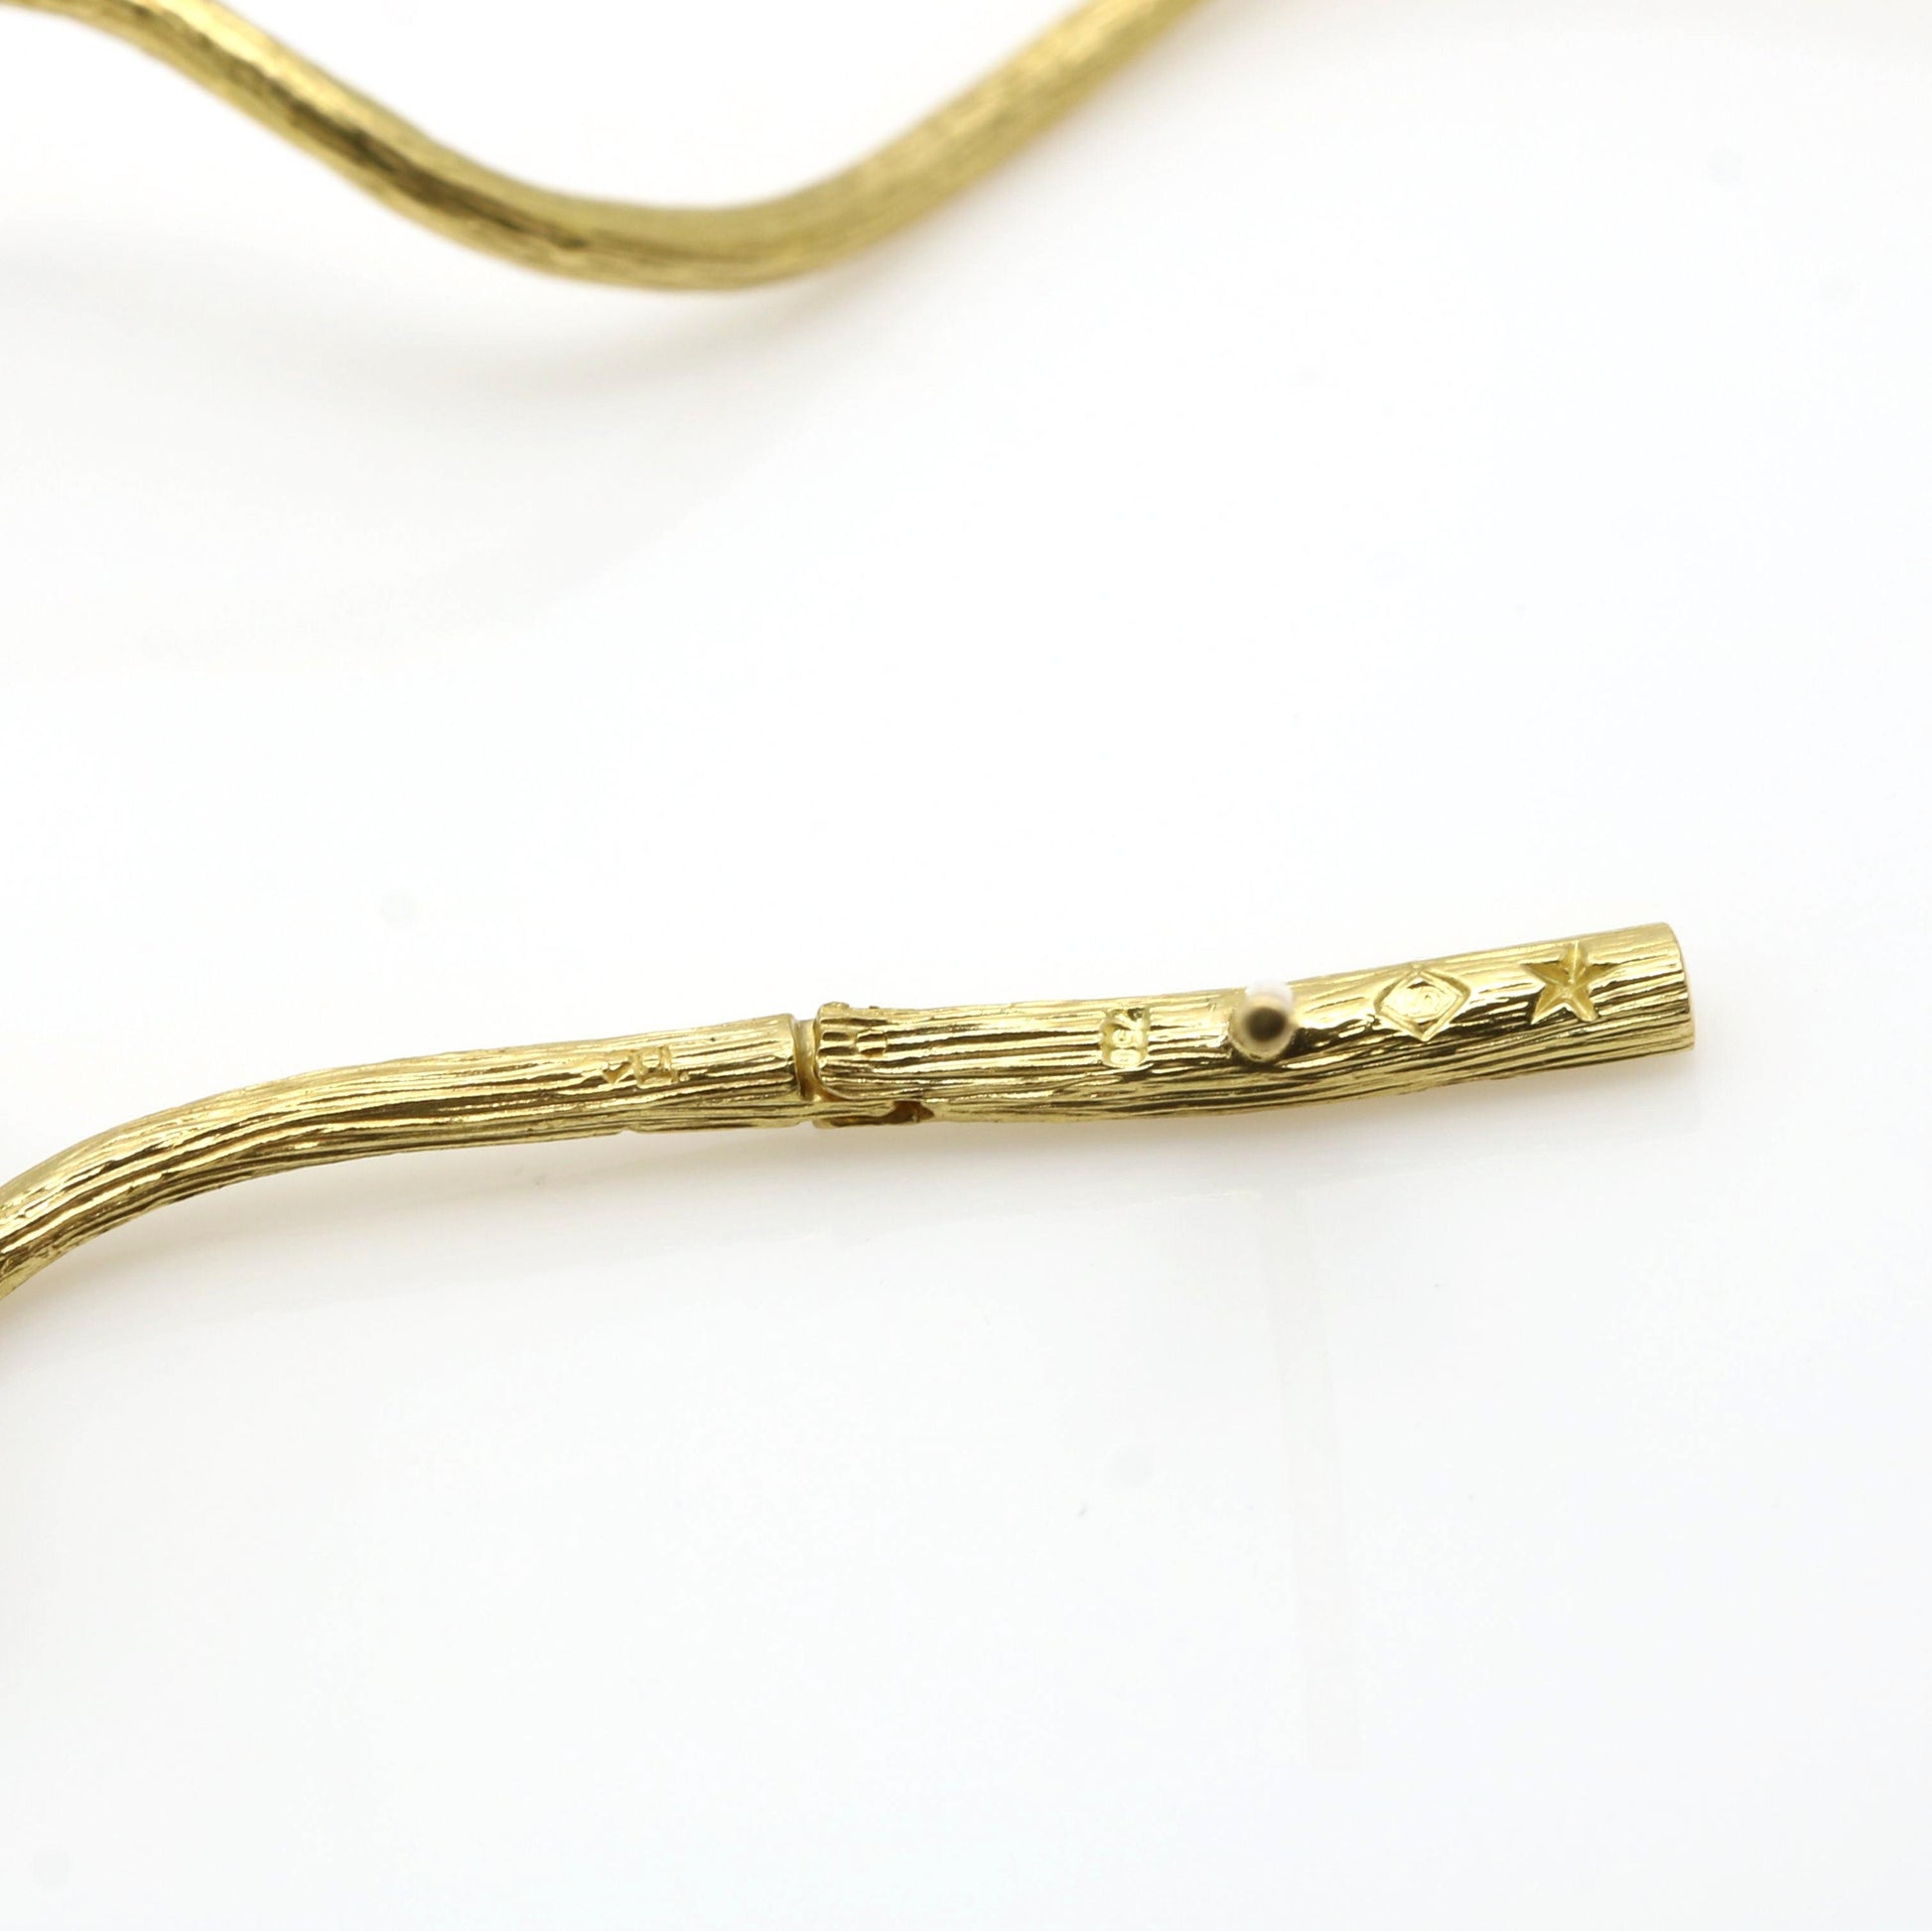 H. Stern Zephyr Florentine Finish Long Drop Earrings in 18k Yellow Gold - 31 Jewels Inc.